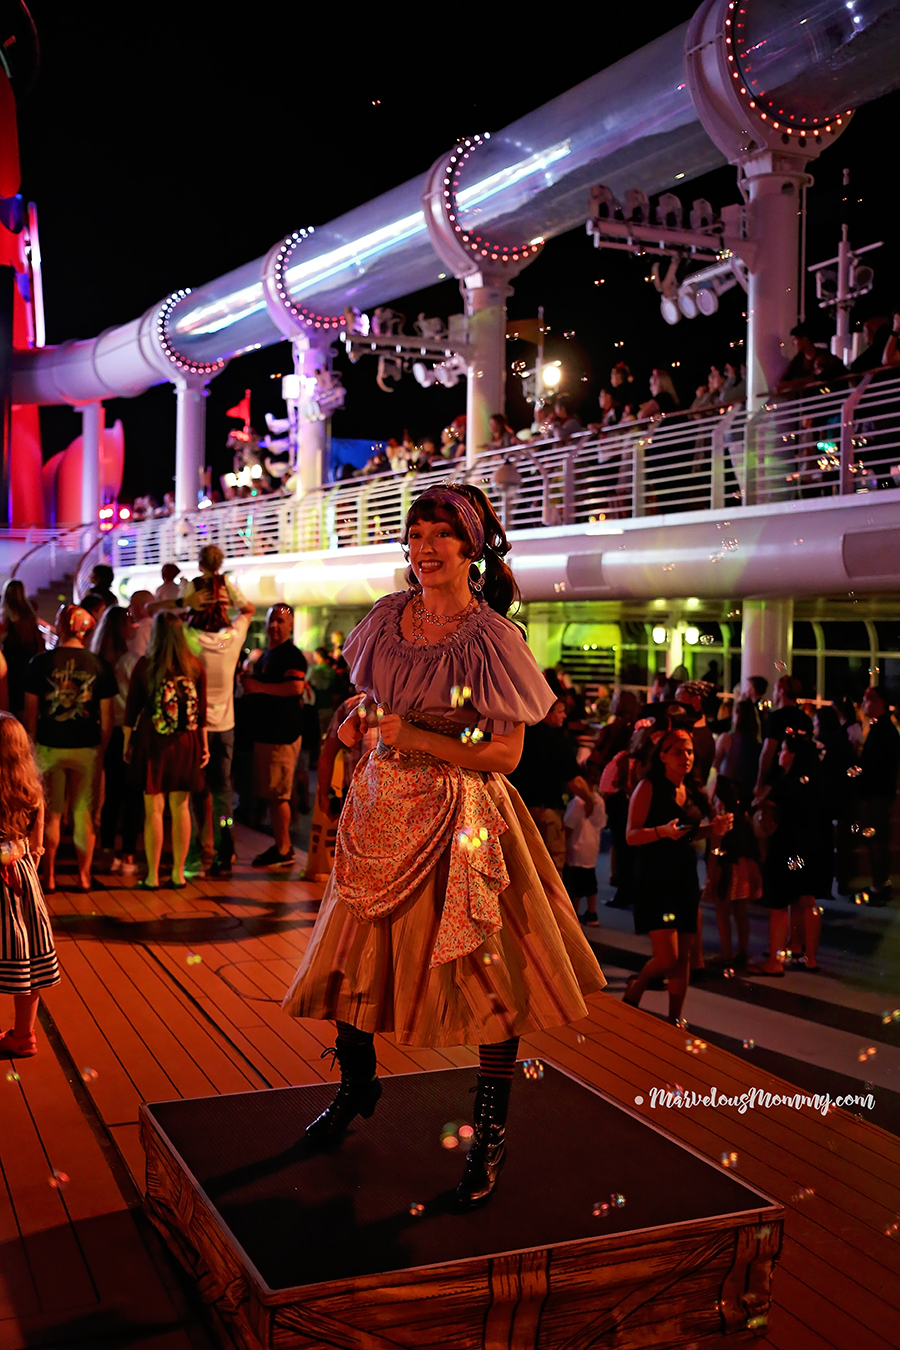 Disney Cruise Pirate Night